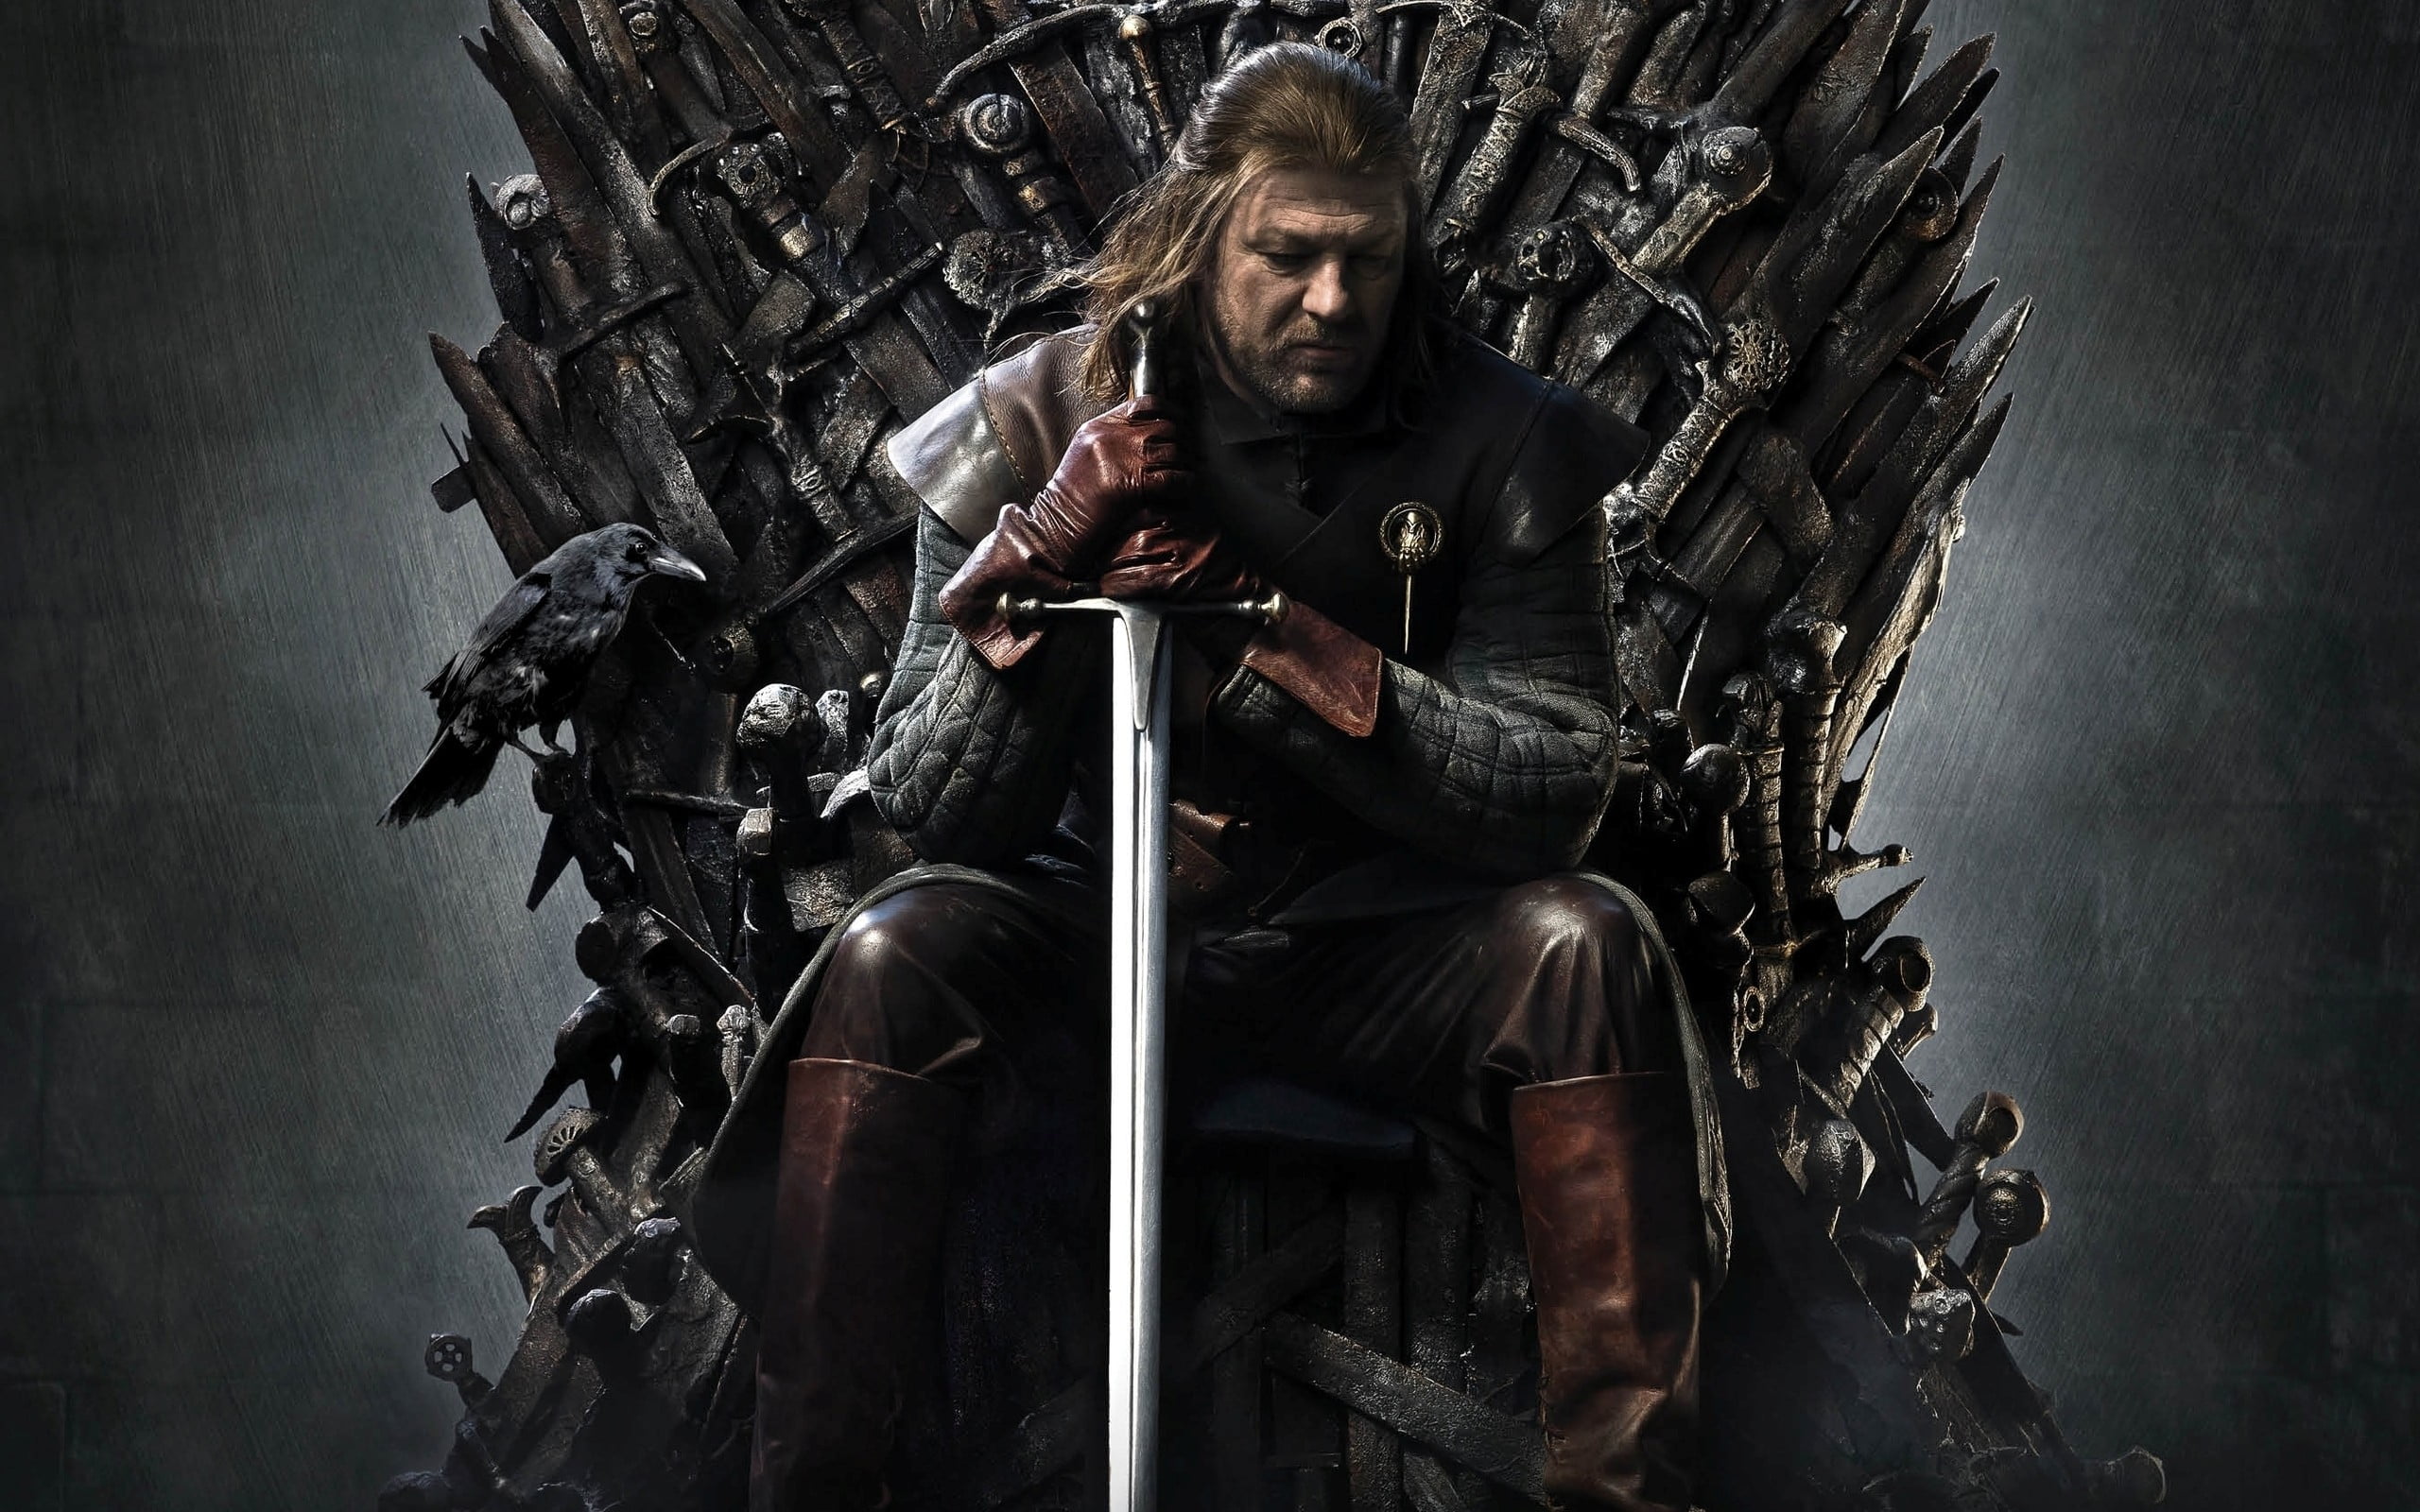 Led Stark sitting on Iron Throne digital wallpaper, Game of Thrones